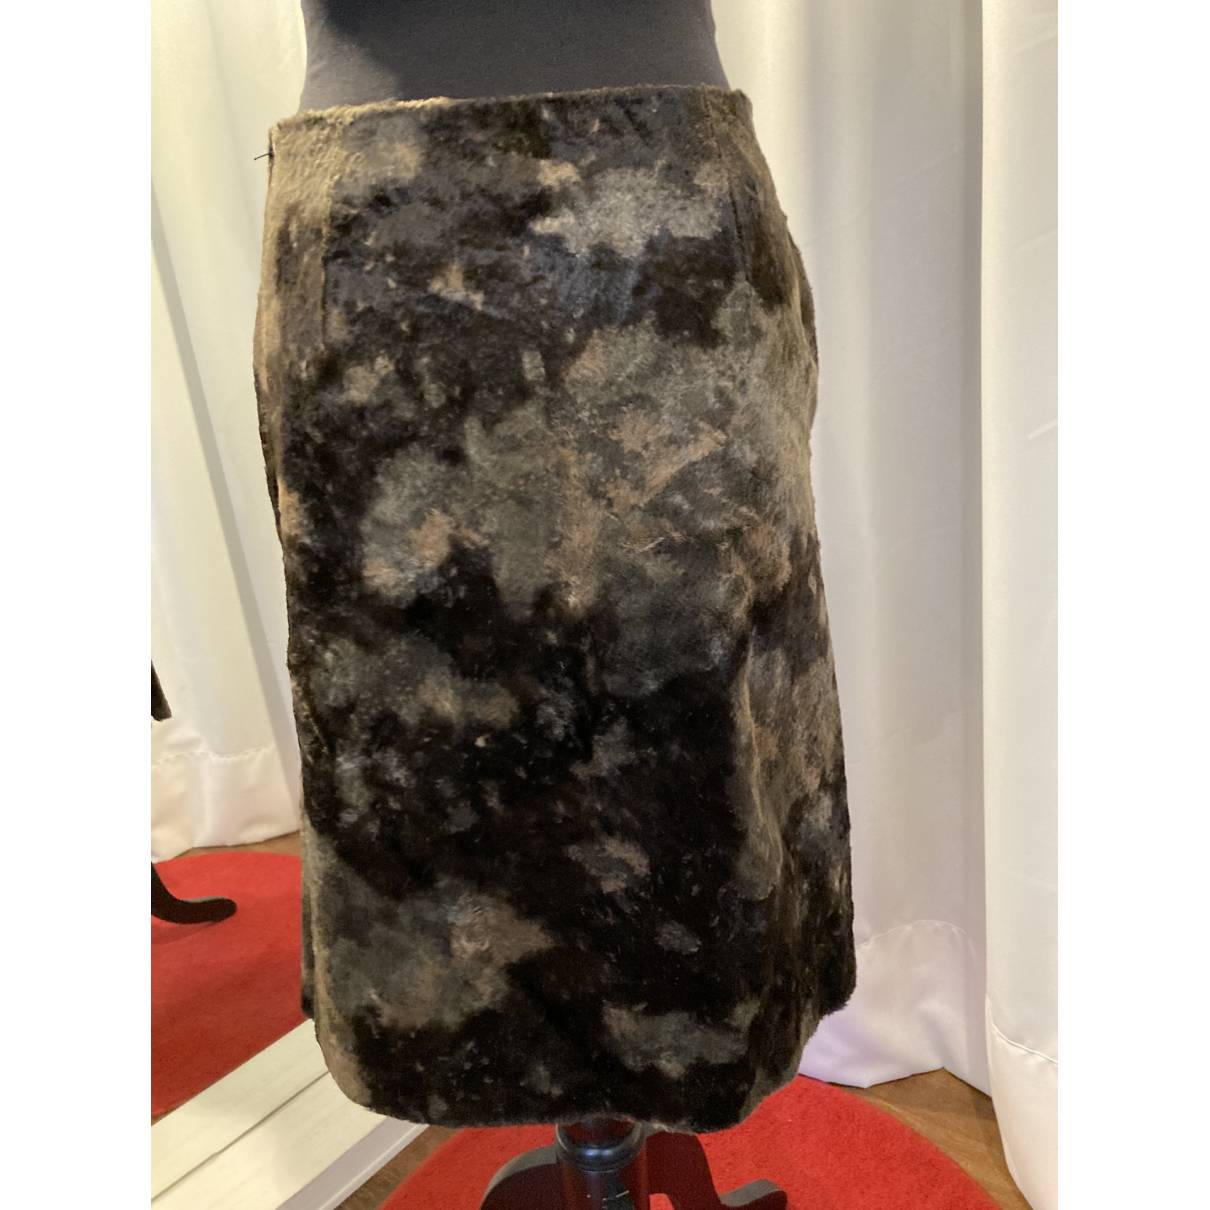 Buy Comme Des Garcons Mid-length skirt online